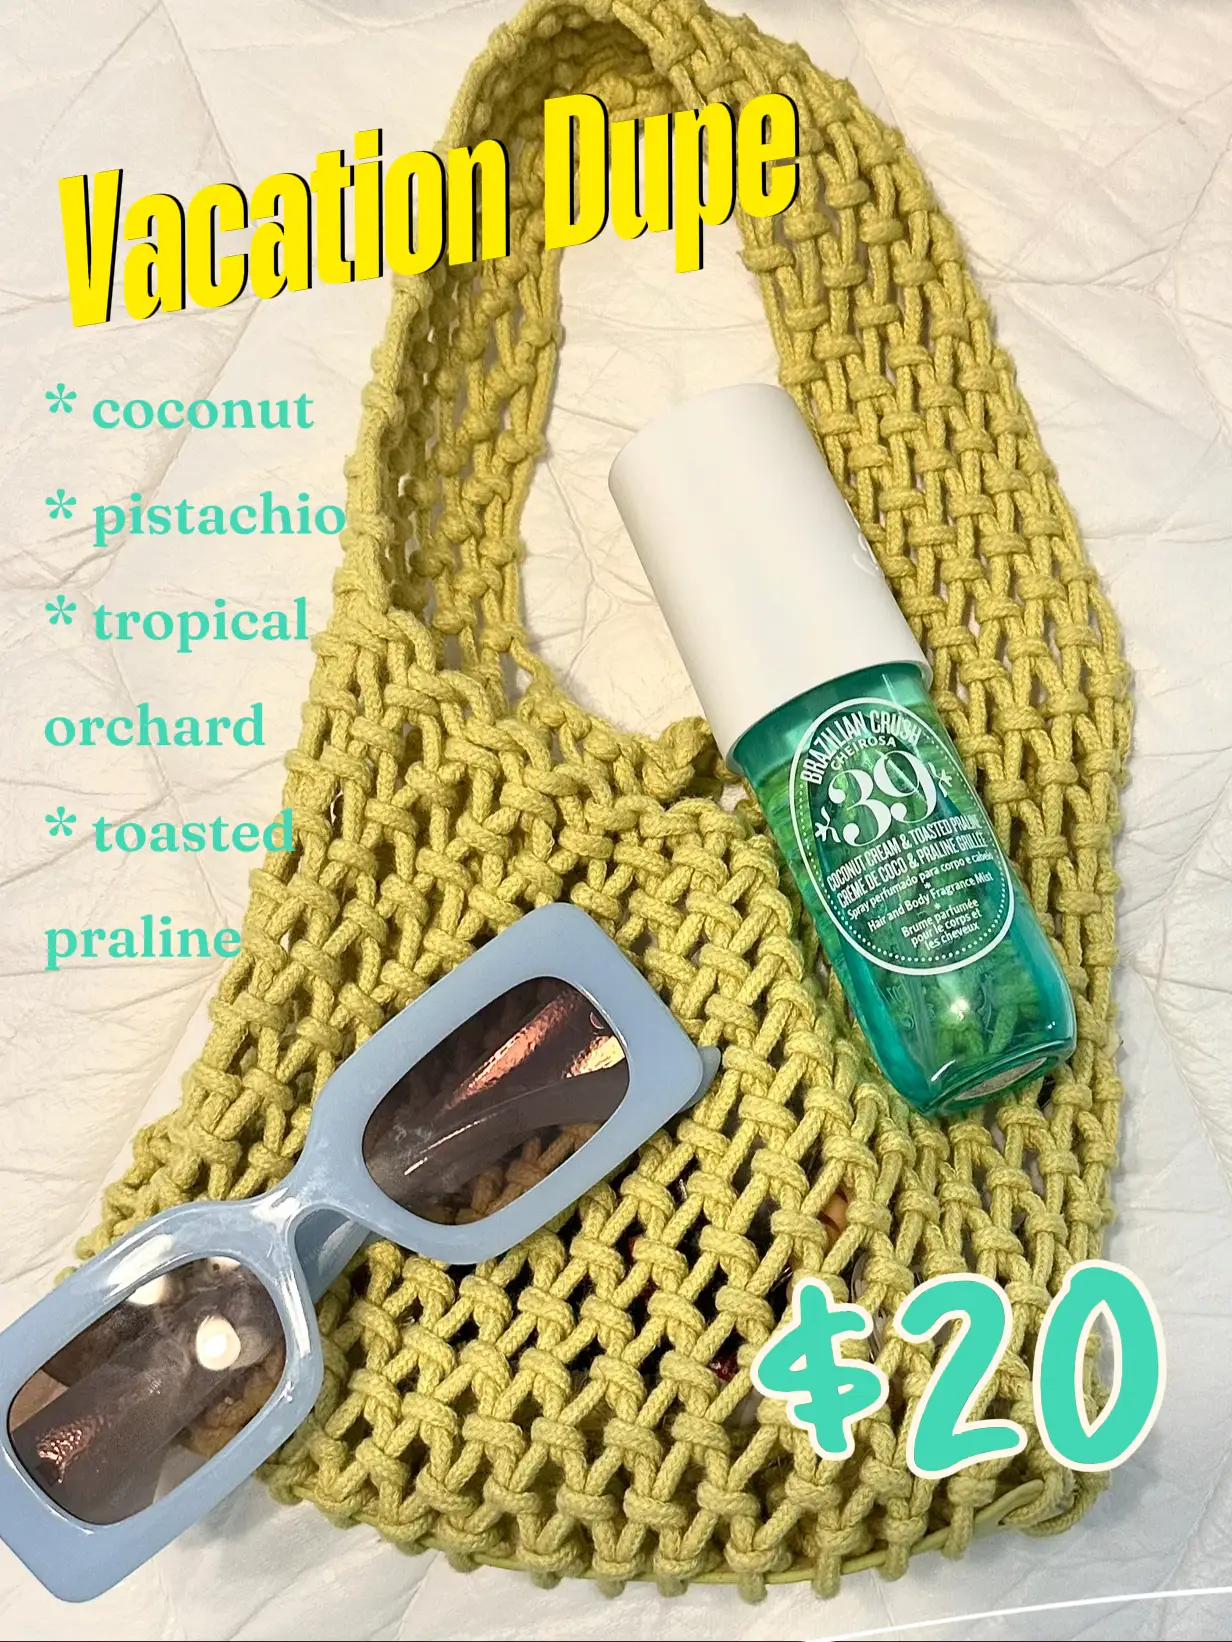  A bottle of coconut pistachio hair and body fragrance mist.